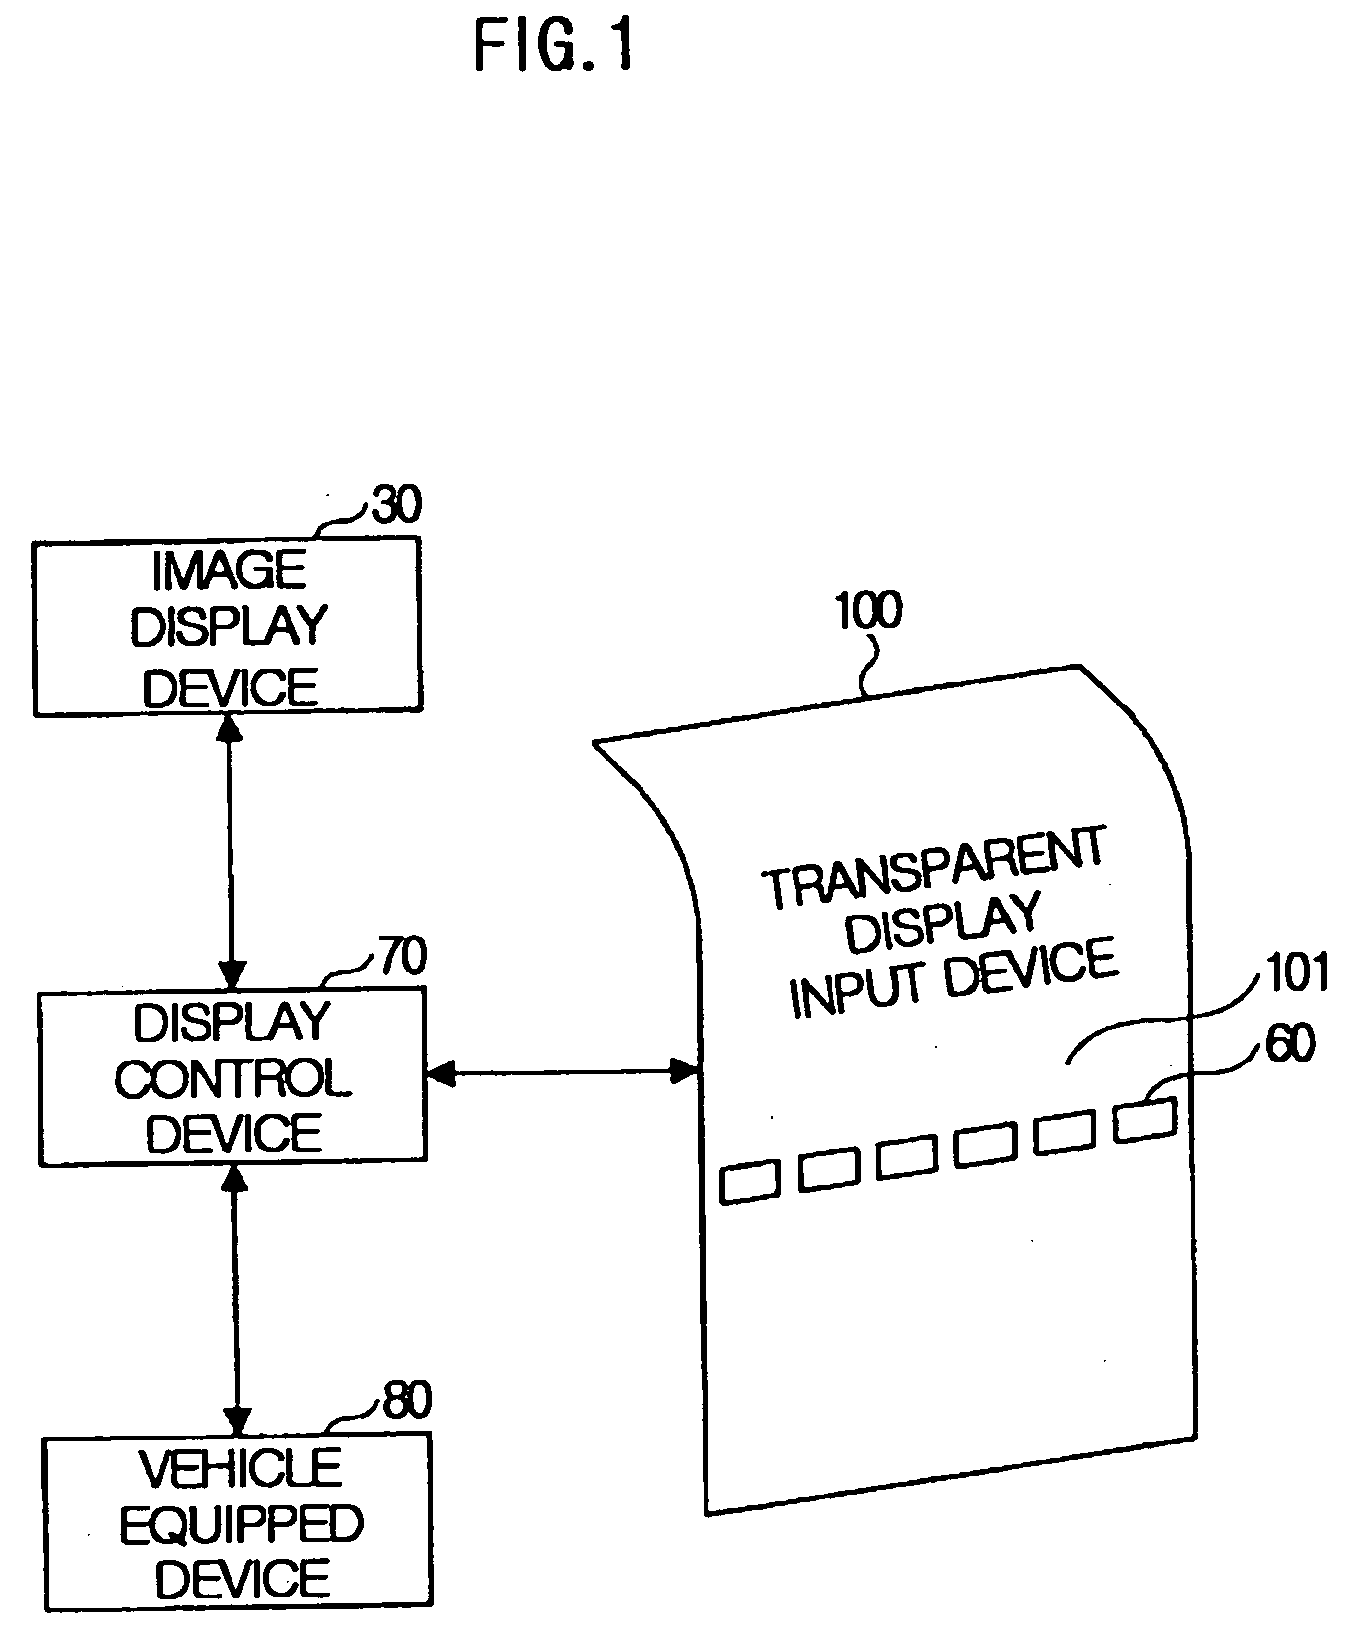 Vehicle Display Apparatus